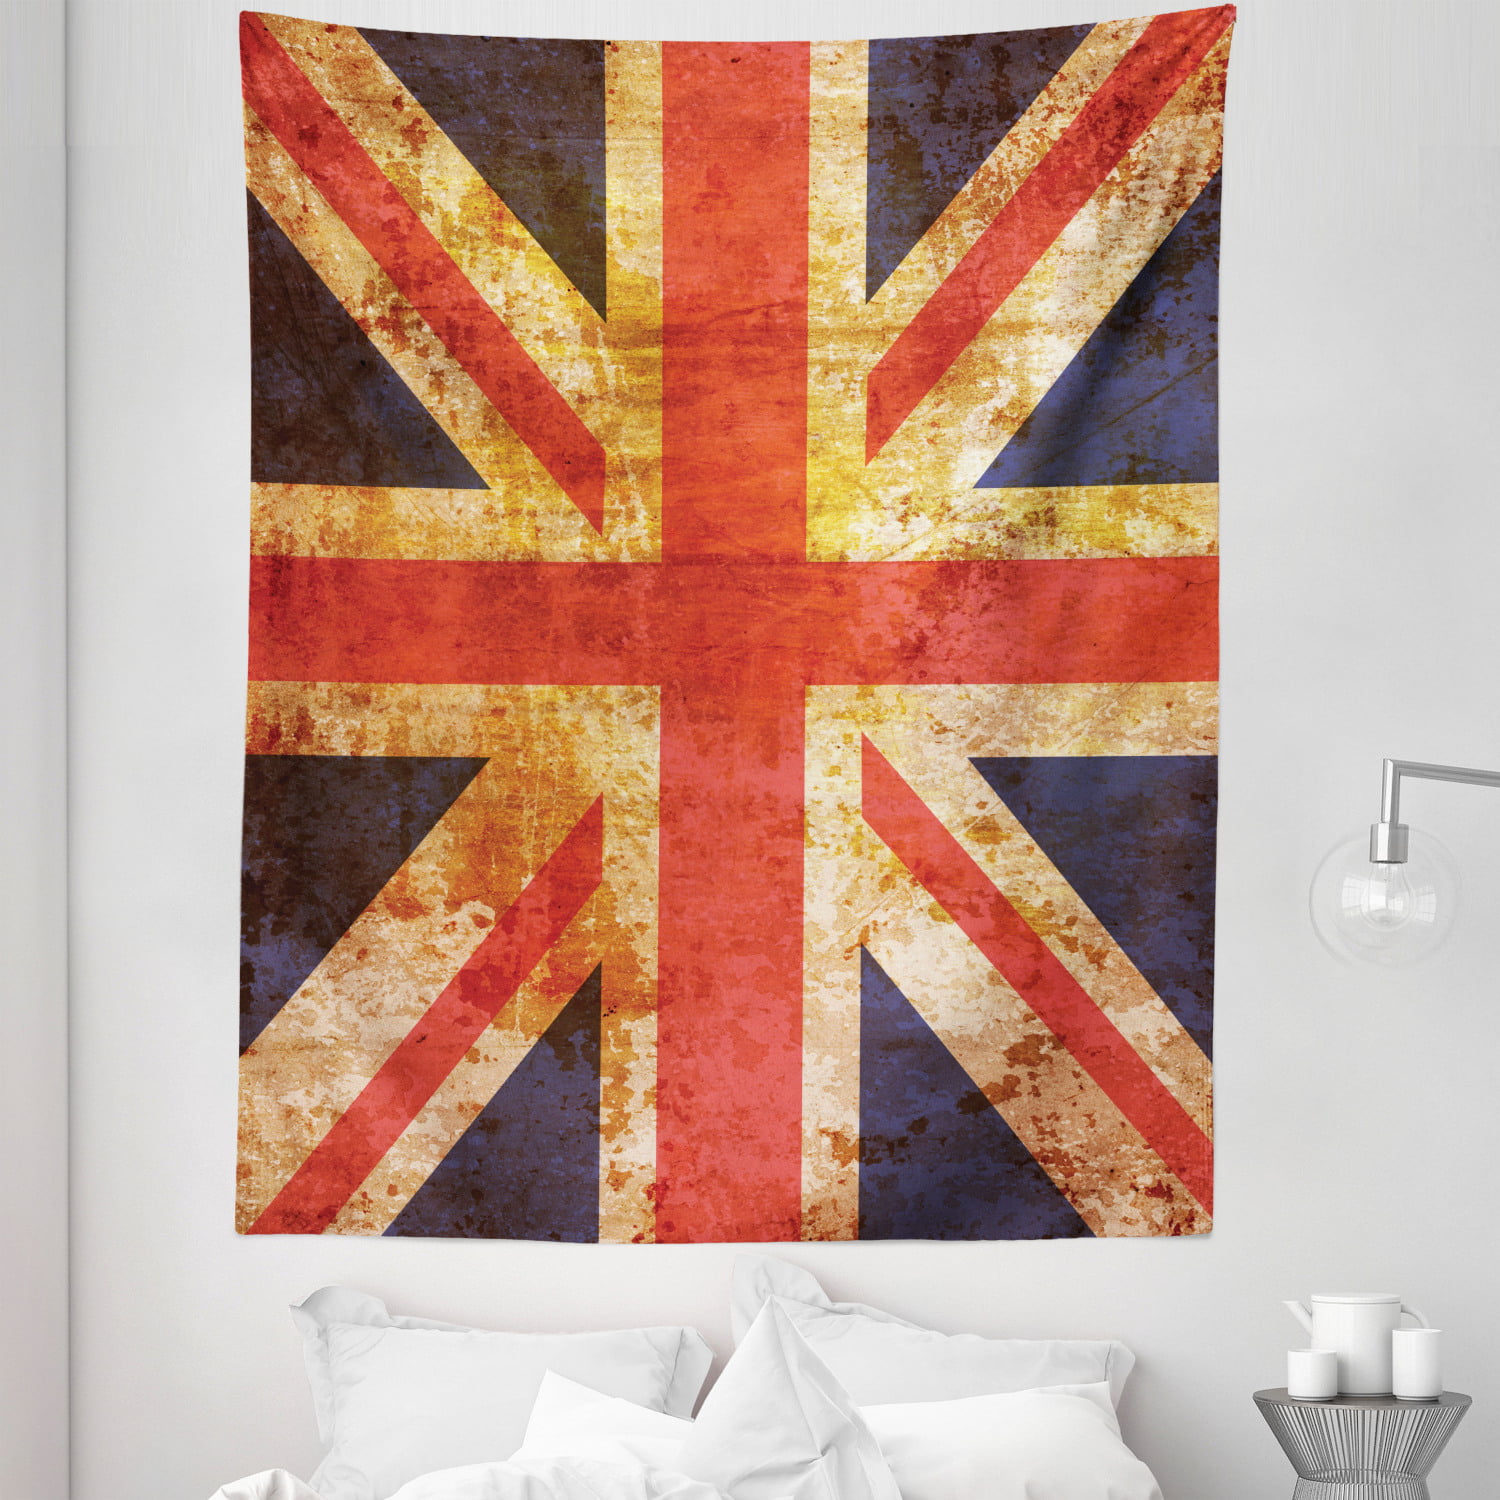 Fringed Brand New Child-Sized `UNION JACK` British Flag Tapestry Throw Blanket 